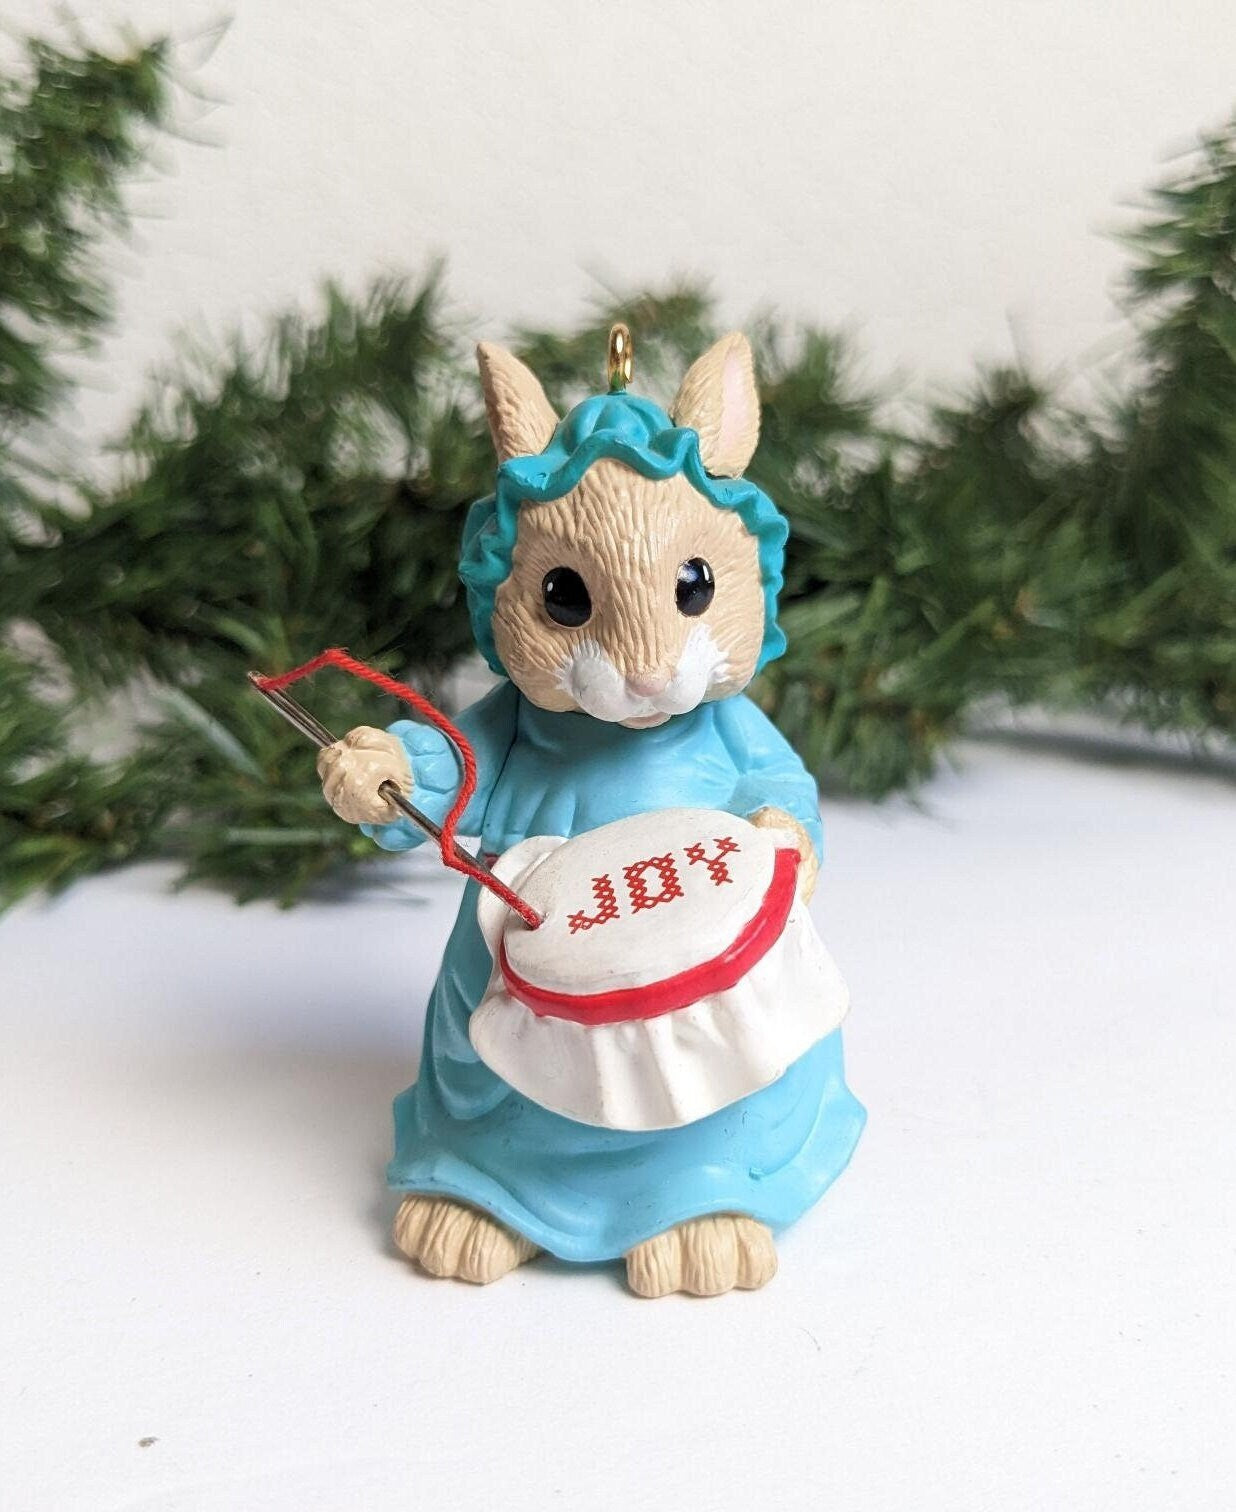 Vintage Stitches of Joy Christmas Ornament